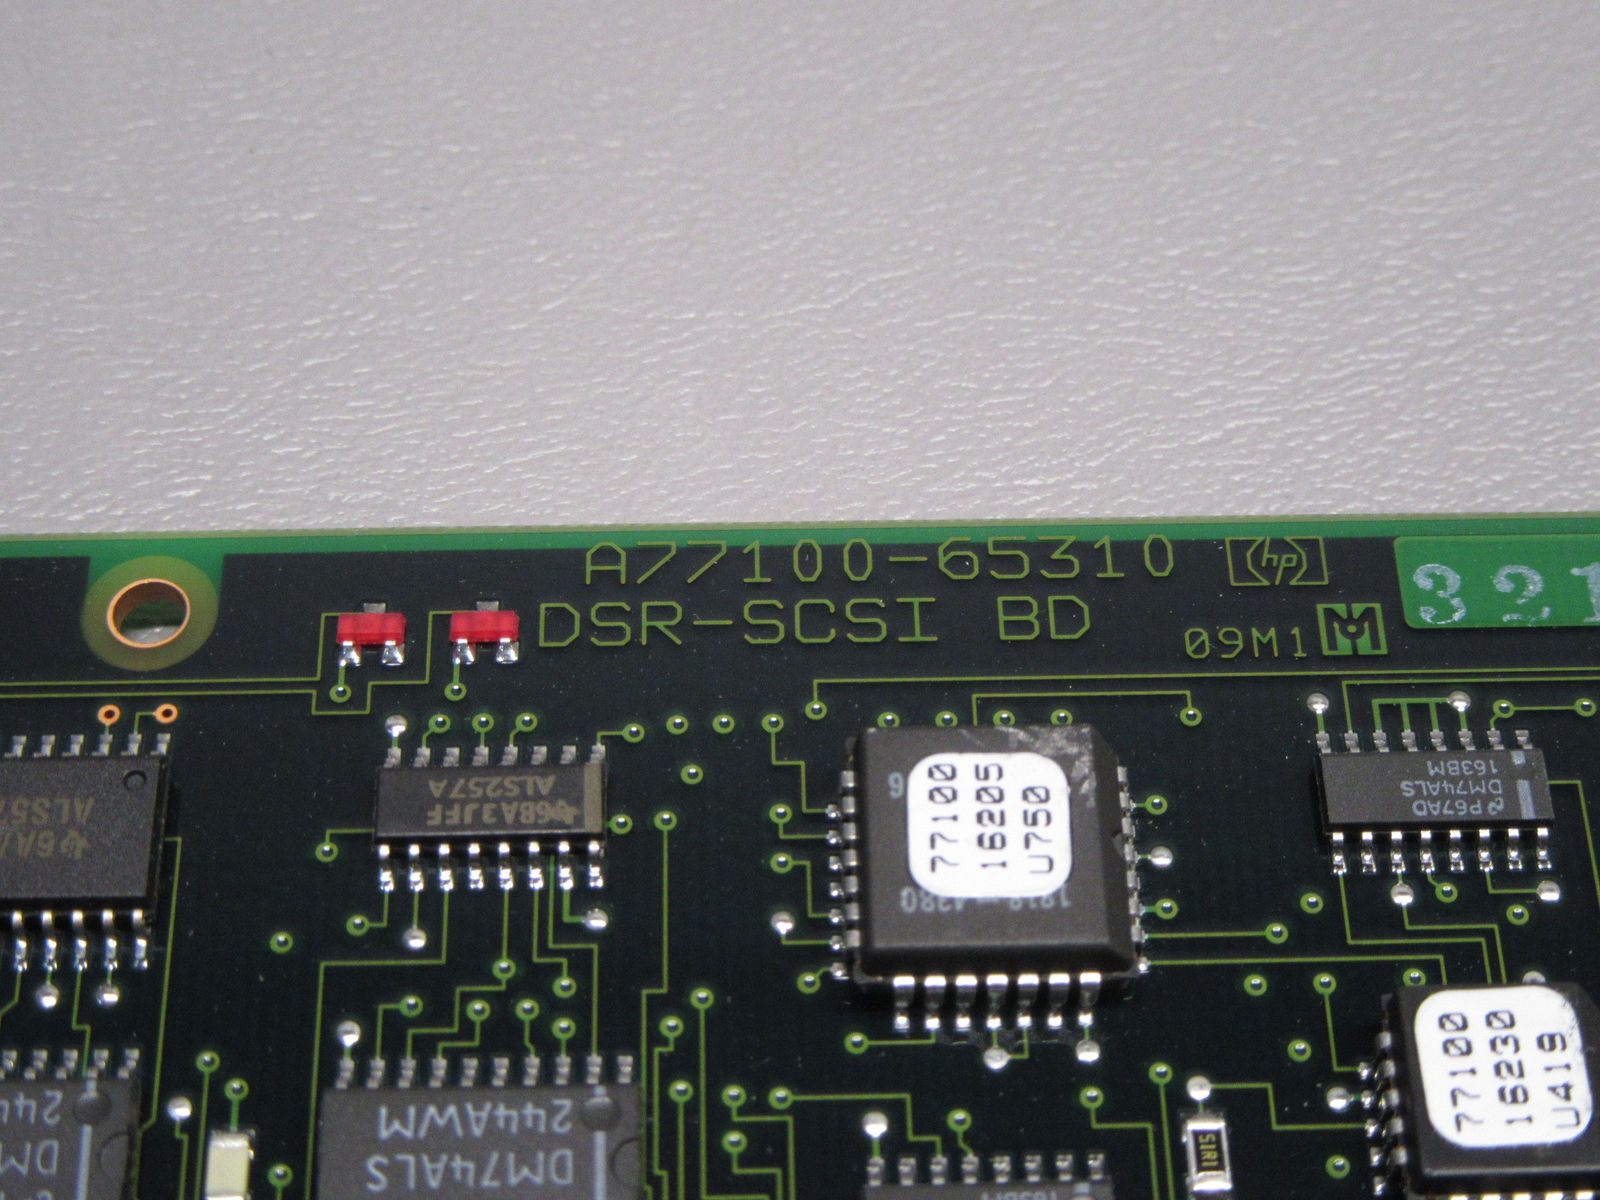 HP M2406A Sonos 2000 Ultrasound DSR-SCSI BD PCB Board A77100-65310